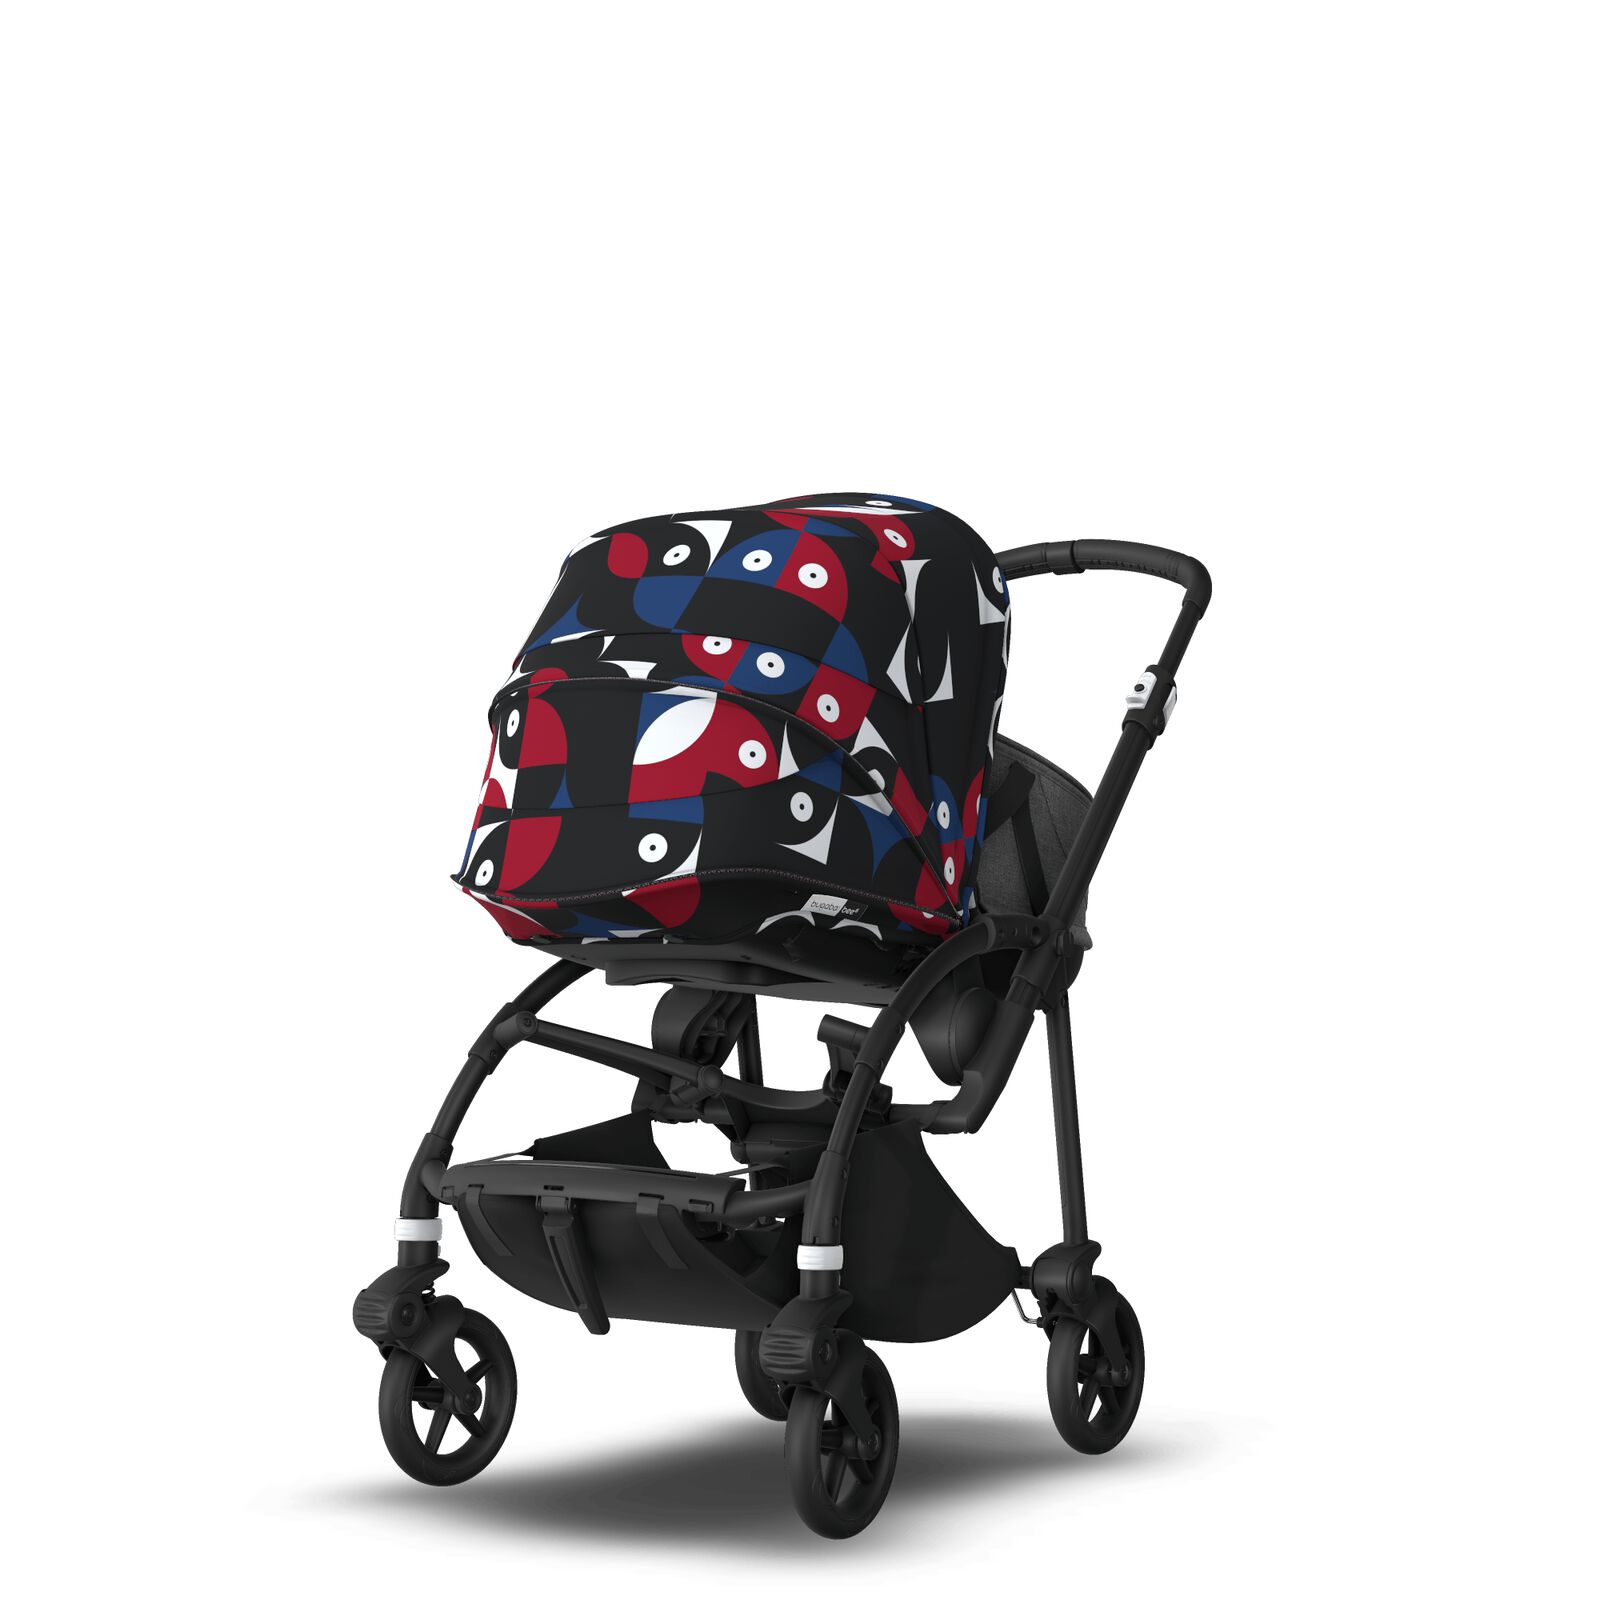 Bugaboo Bee 6 bassinet and seat stroller black base, grey fabrics, animal explorer red/blue sun canopy